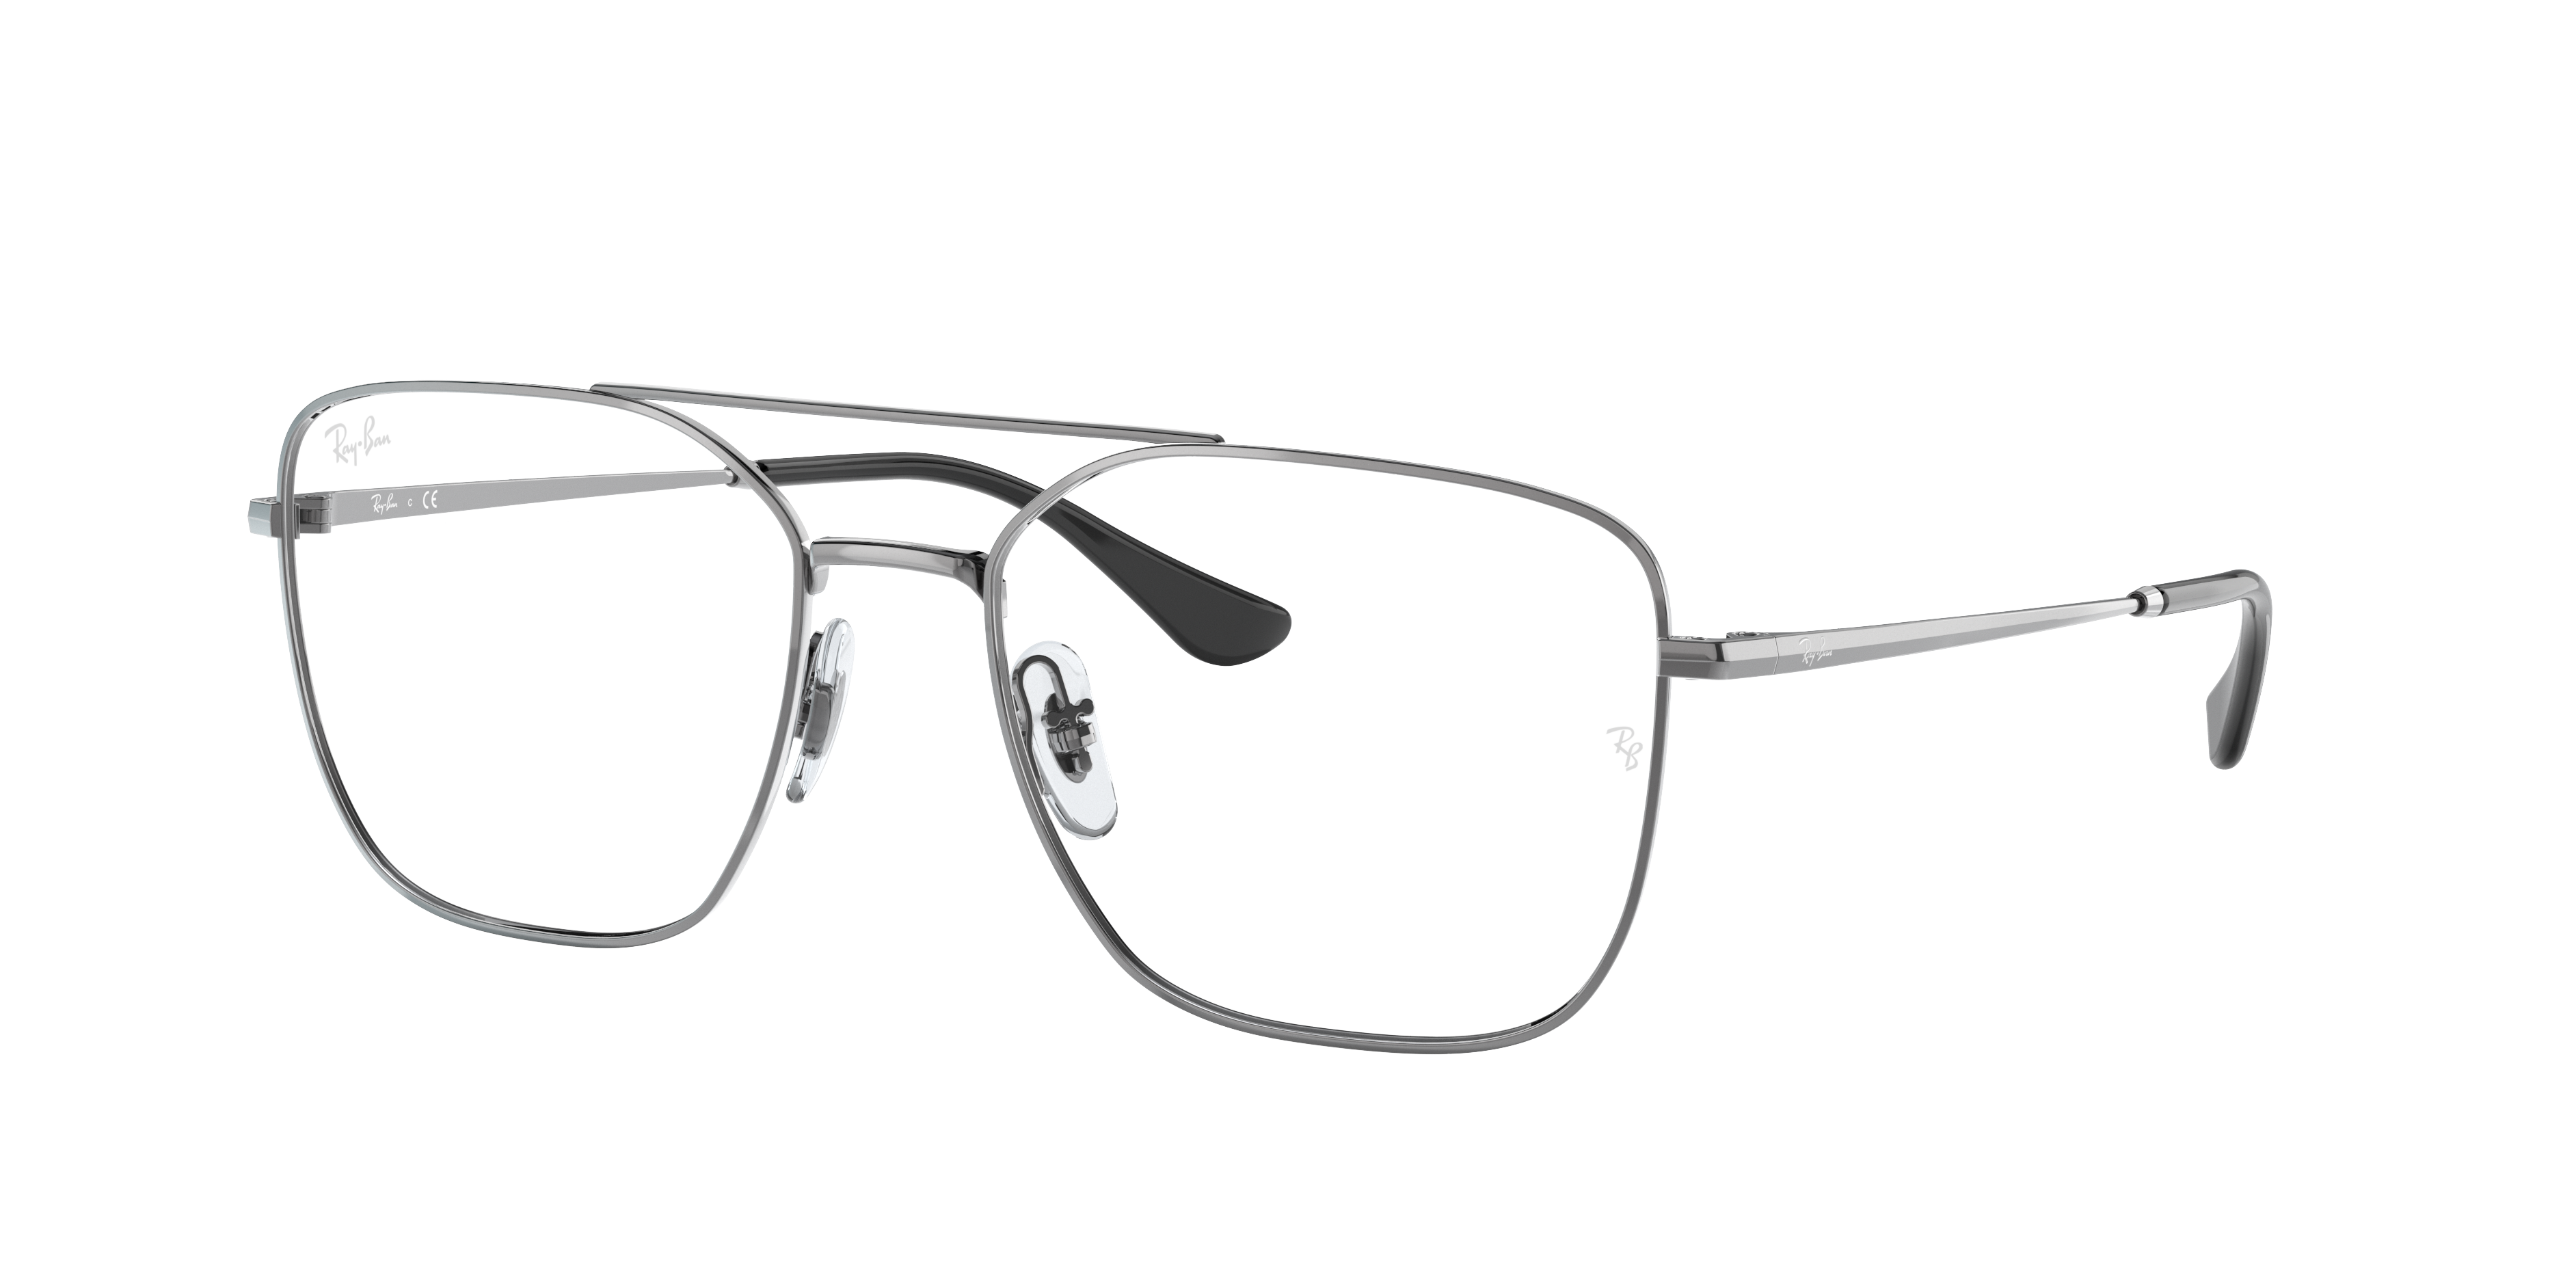 Rb6450 Eyeglasses with Gunmetal Frame | Ray-Ban®